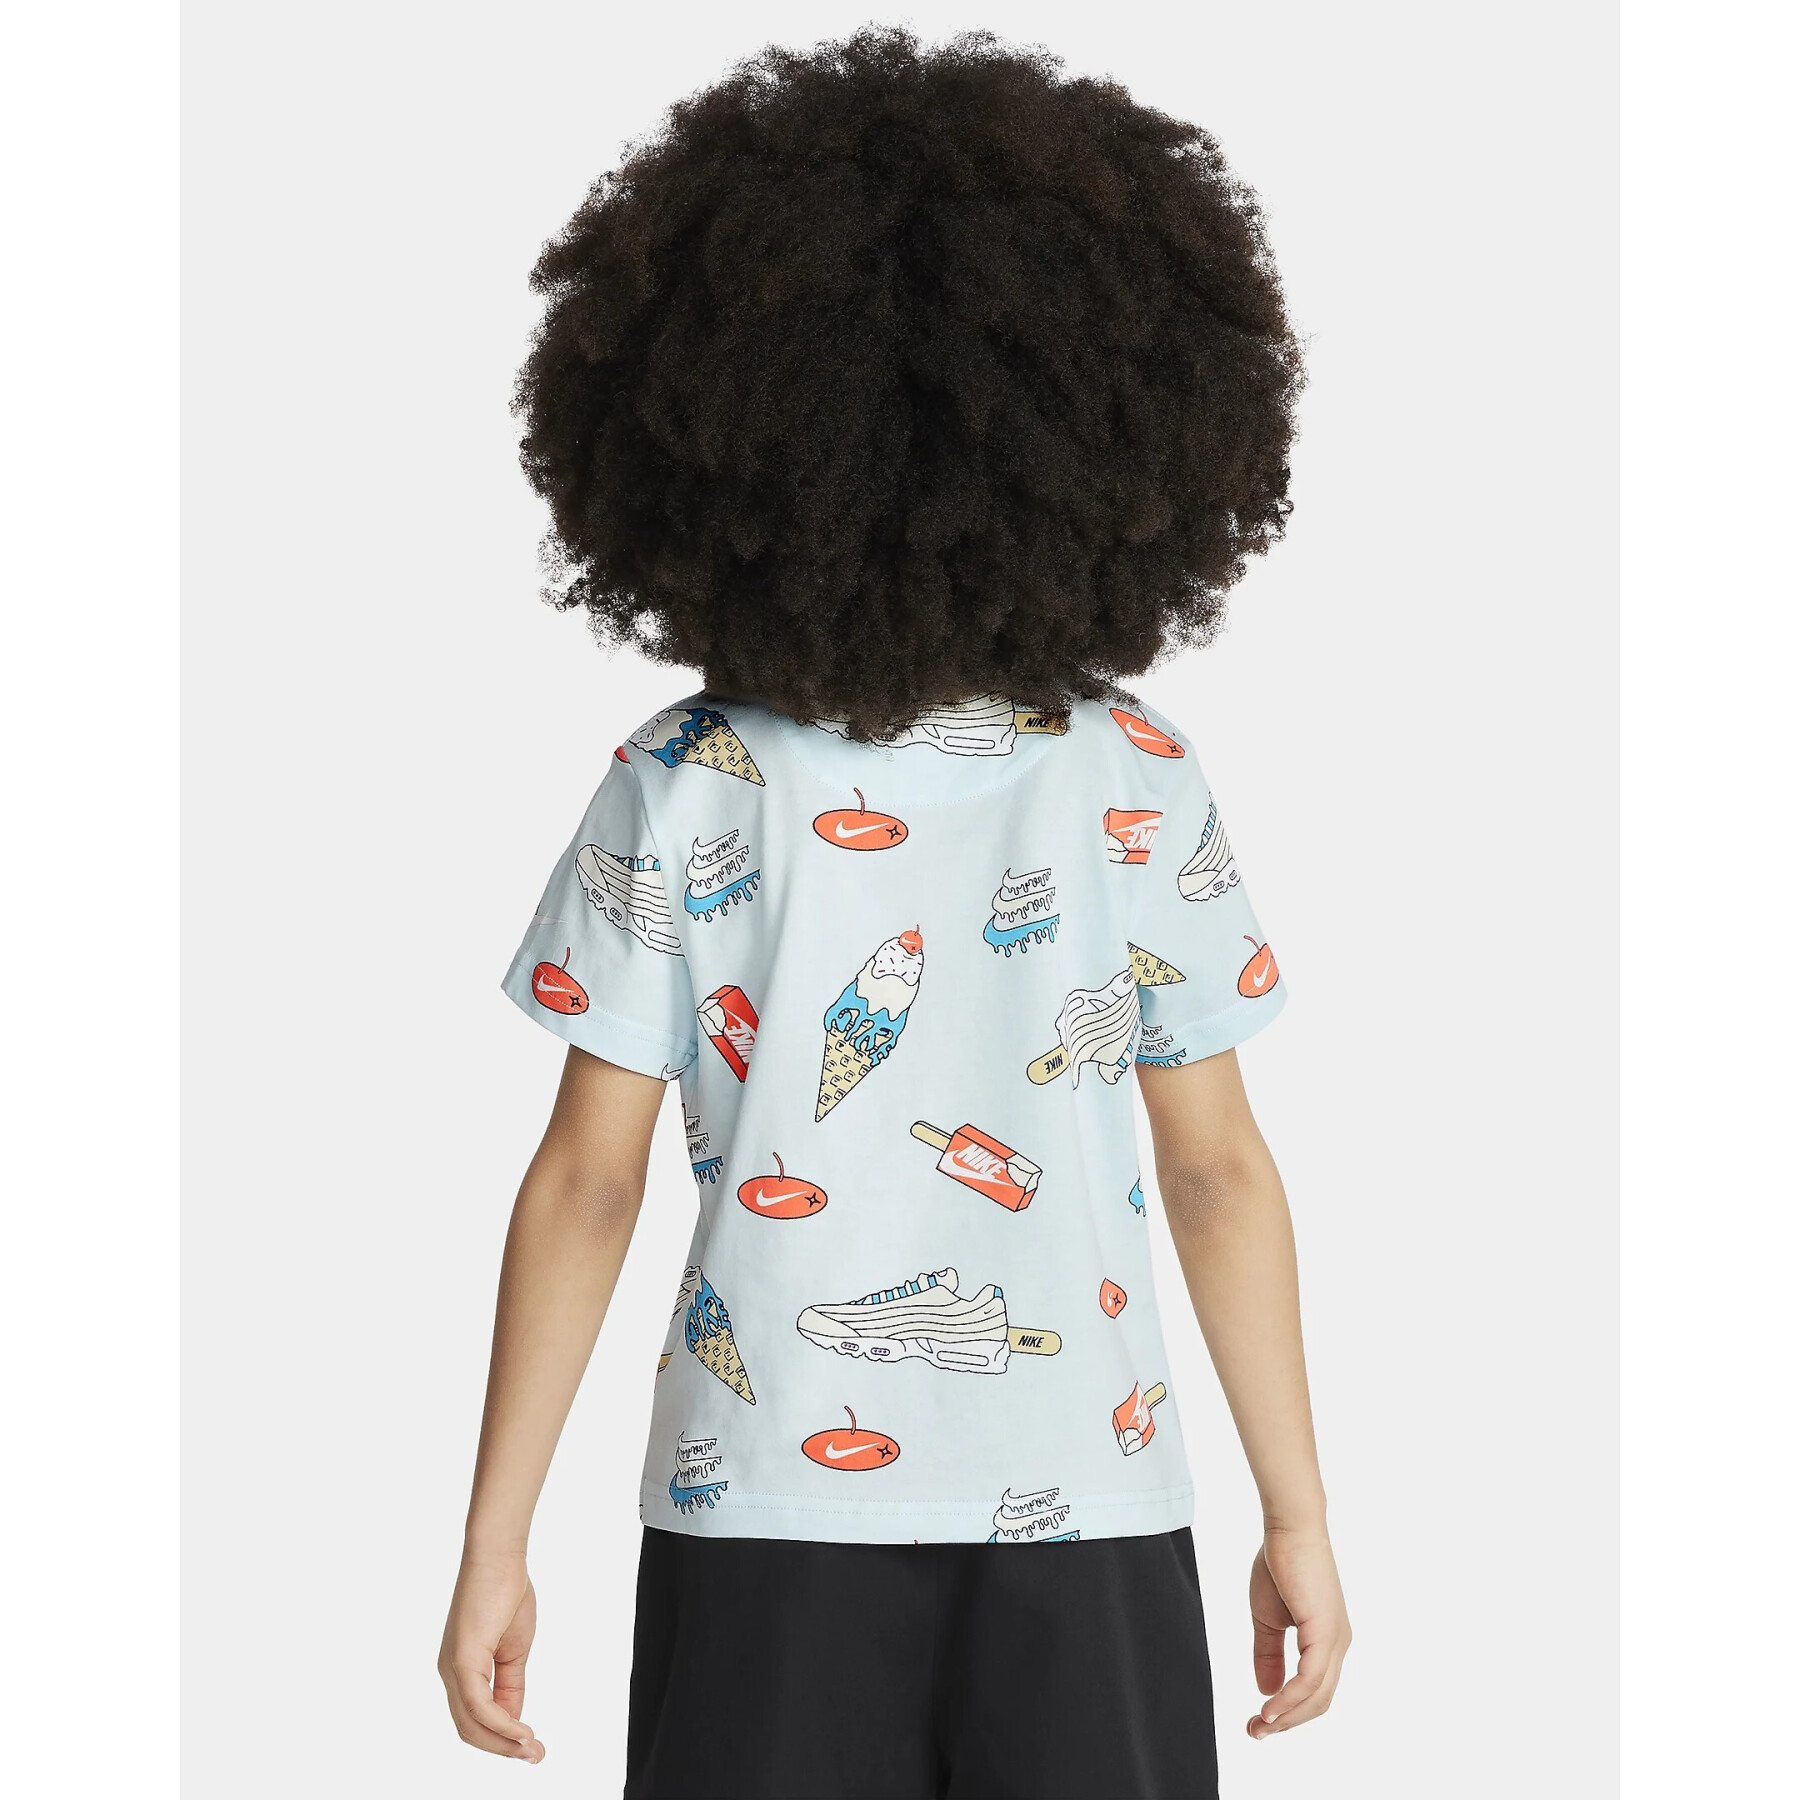 Kinder-T-shirt Nike Sole Food Print